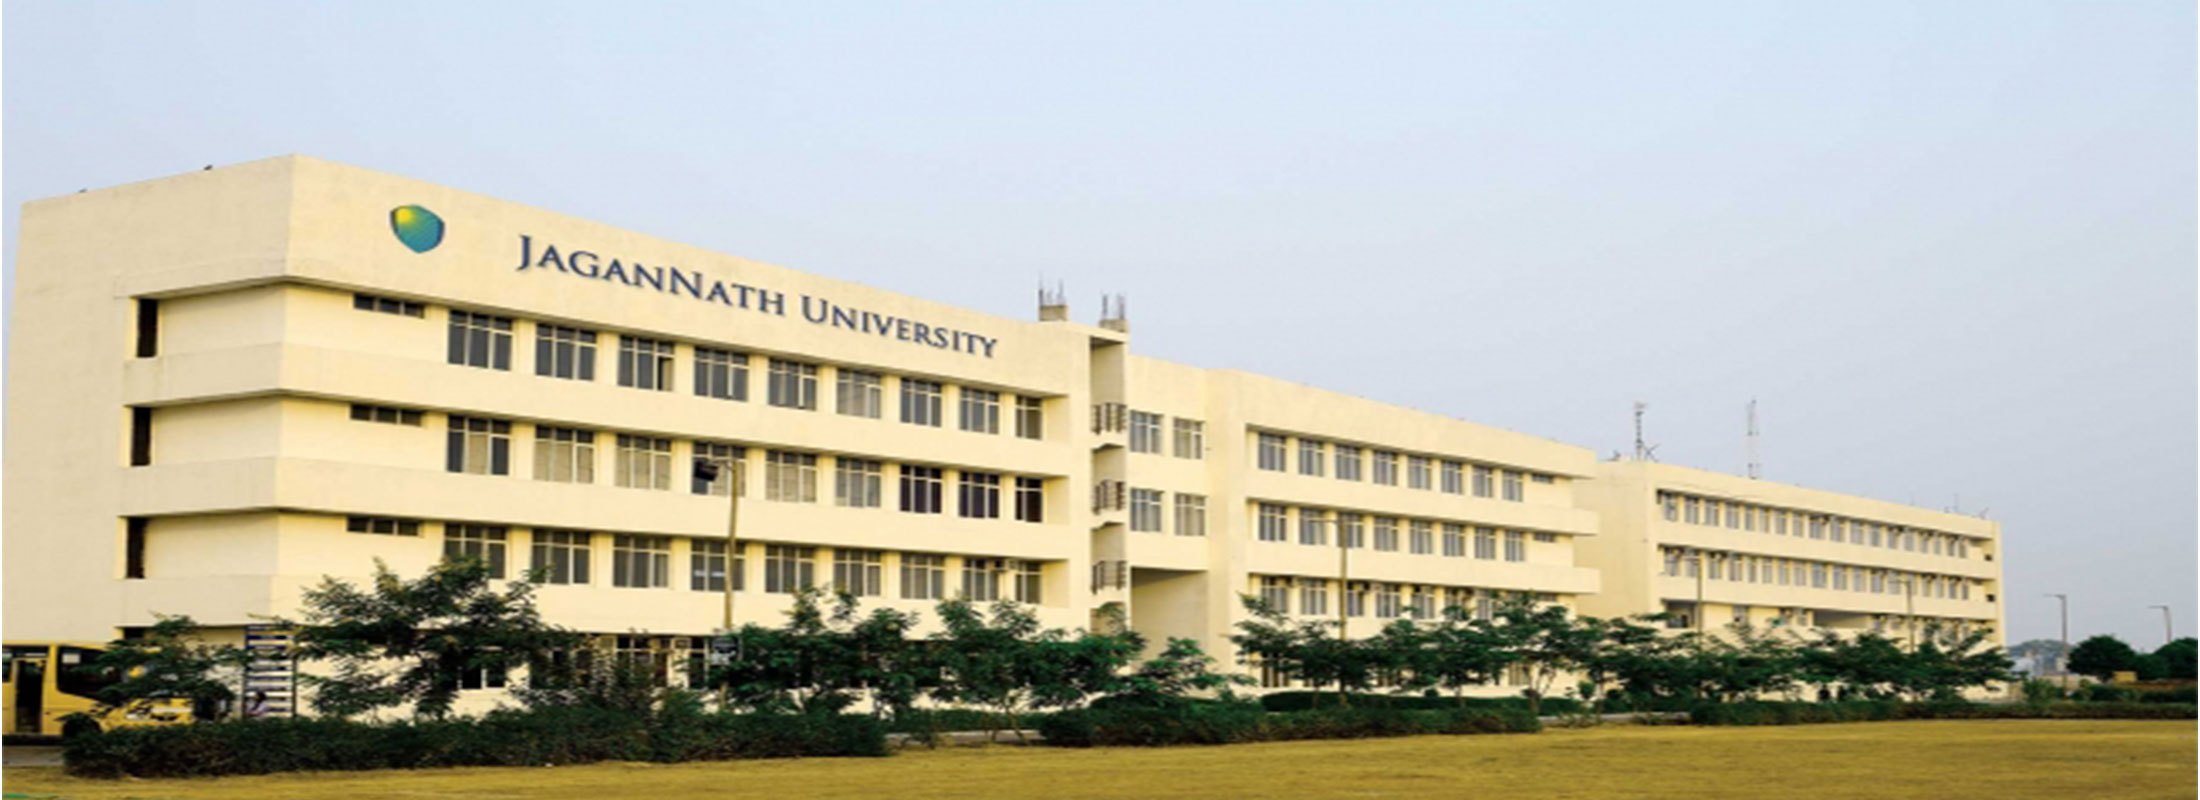 Jagan Nath University, Jhajjar Image